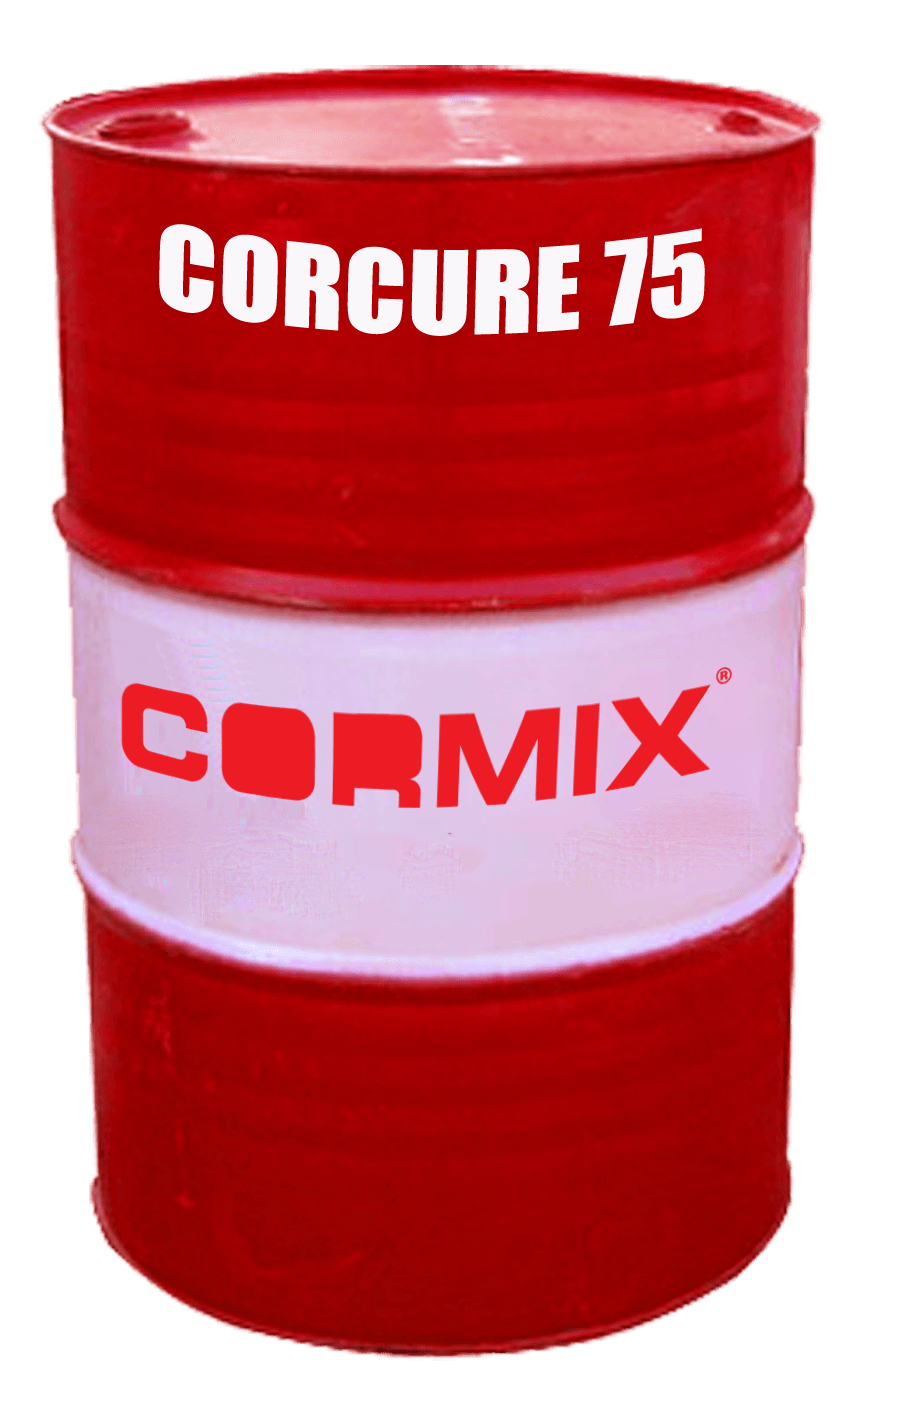 CORMIX CORCURE75 น้ำยาบ่มคอนกรีต สีฟ้า